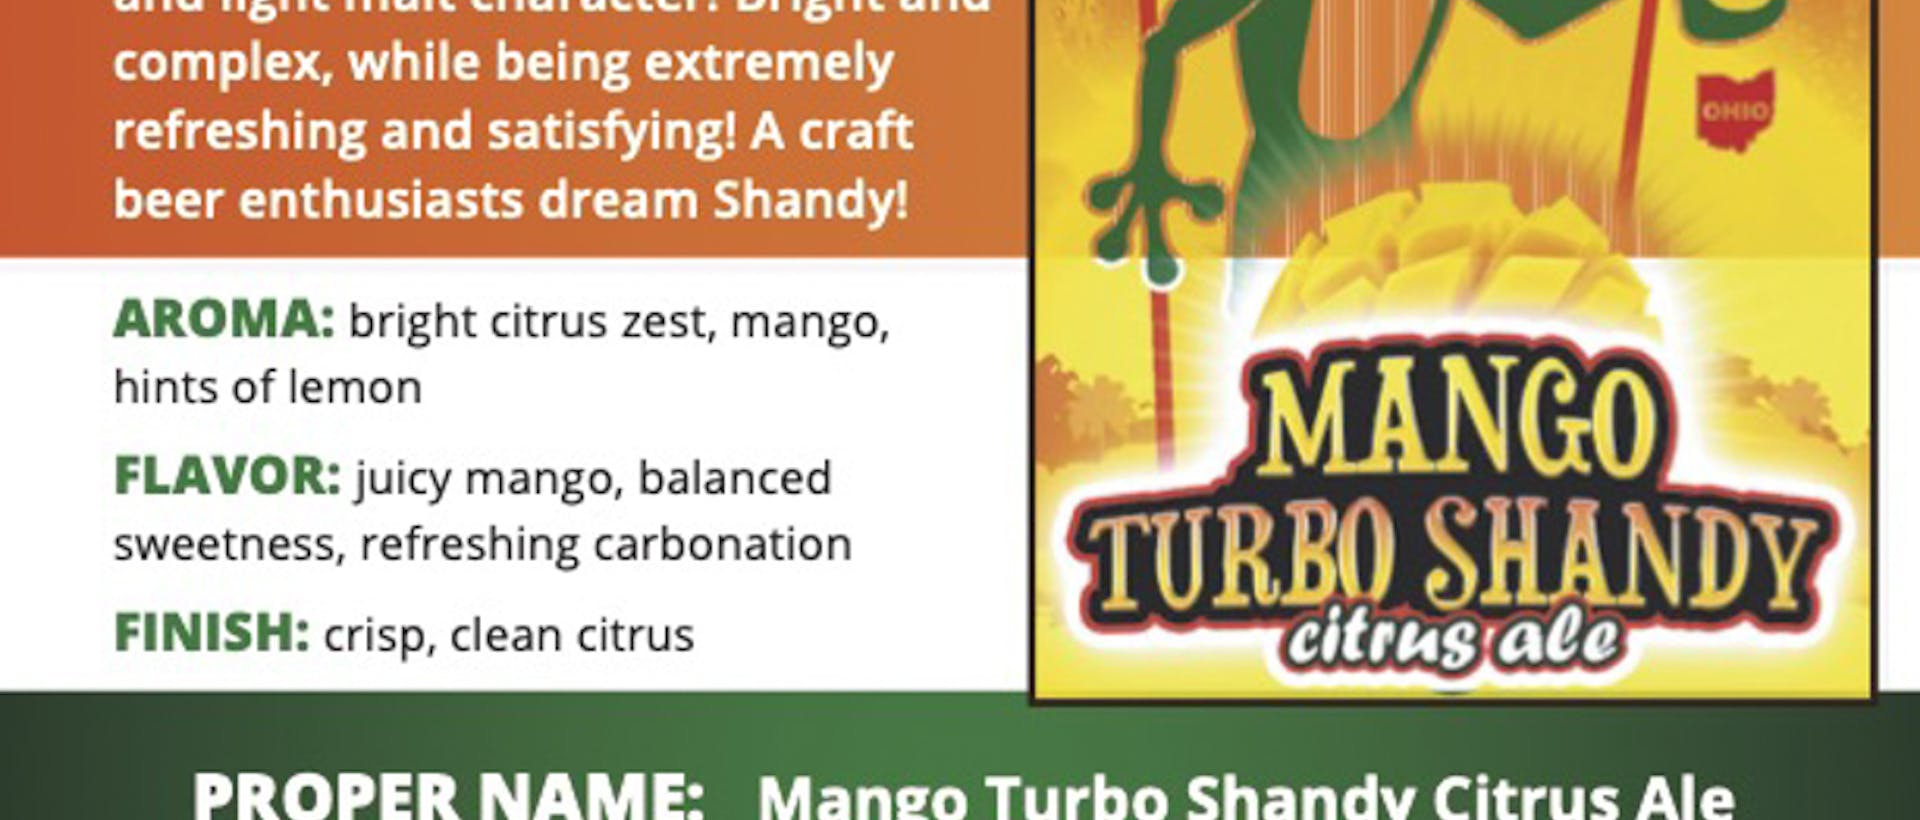 HF_Sell Sheet - Shandy Series - Mango Turbo Shandy Citrus Ale (updated 01-27-2022)